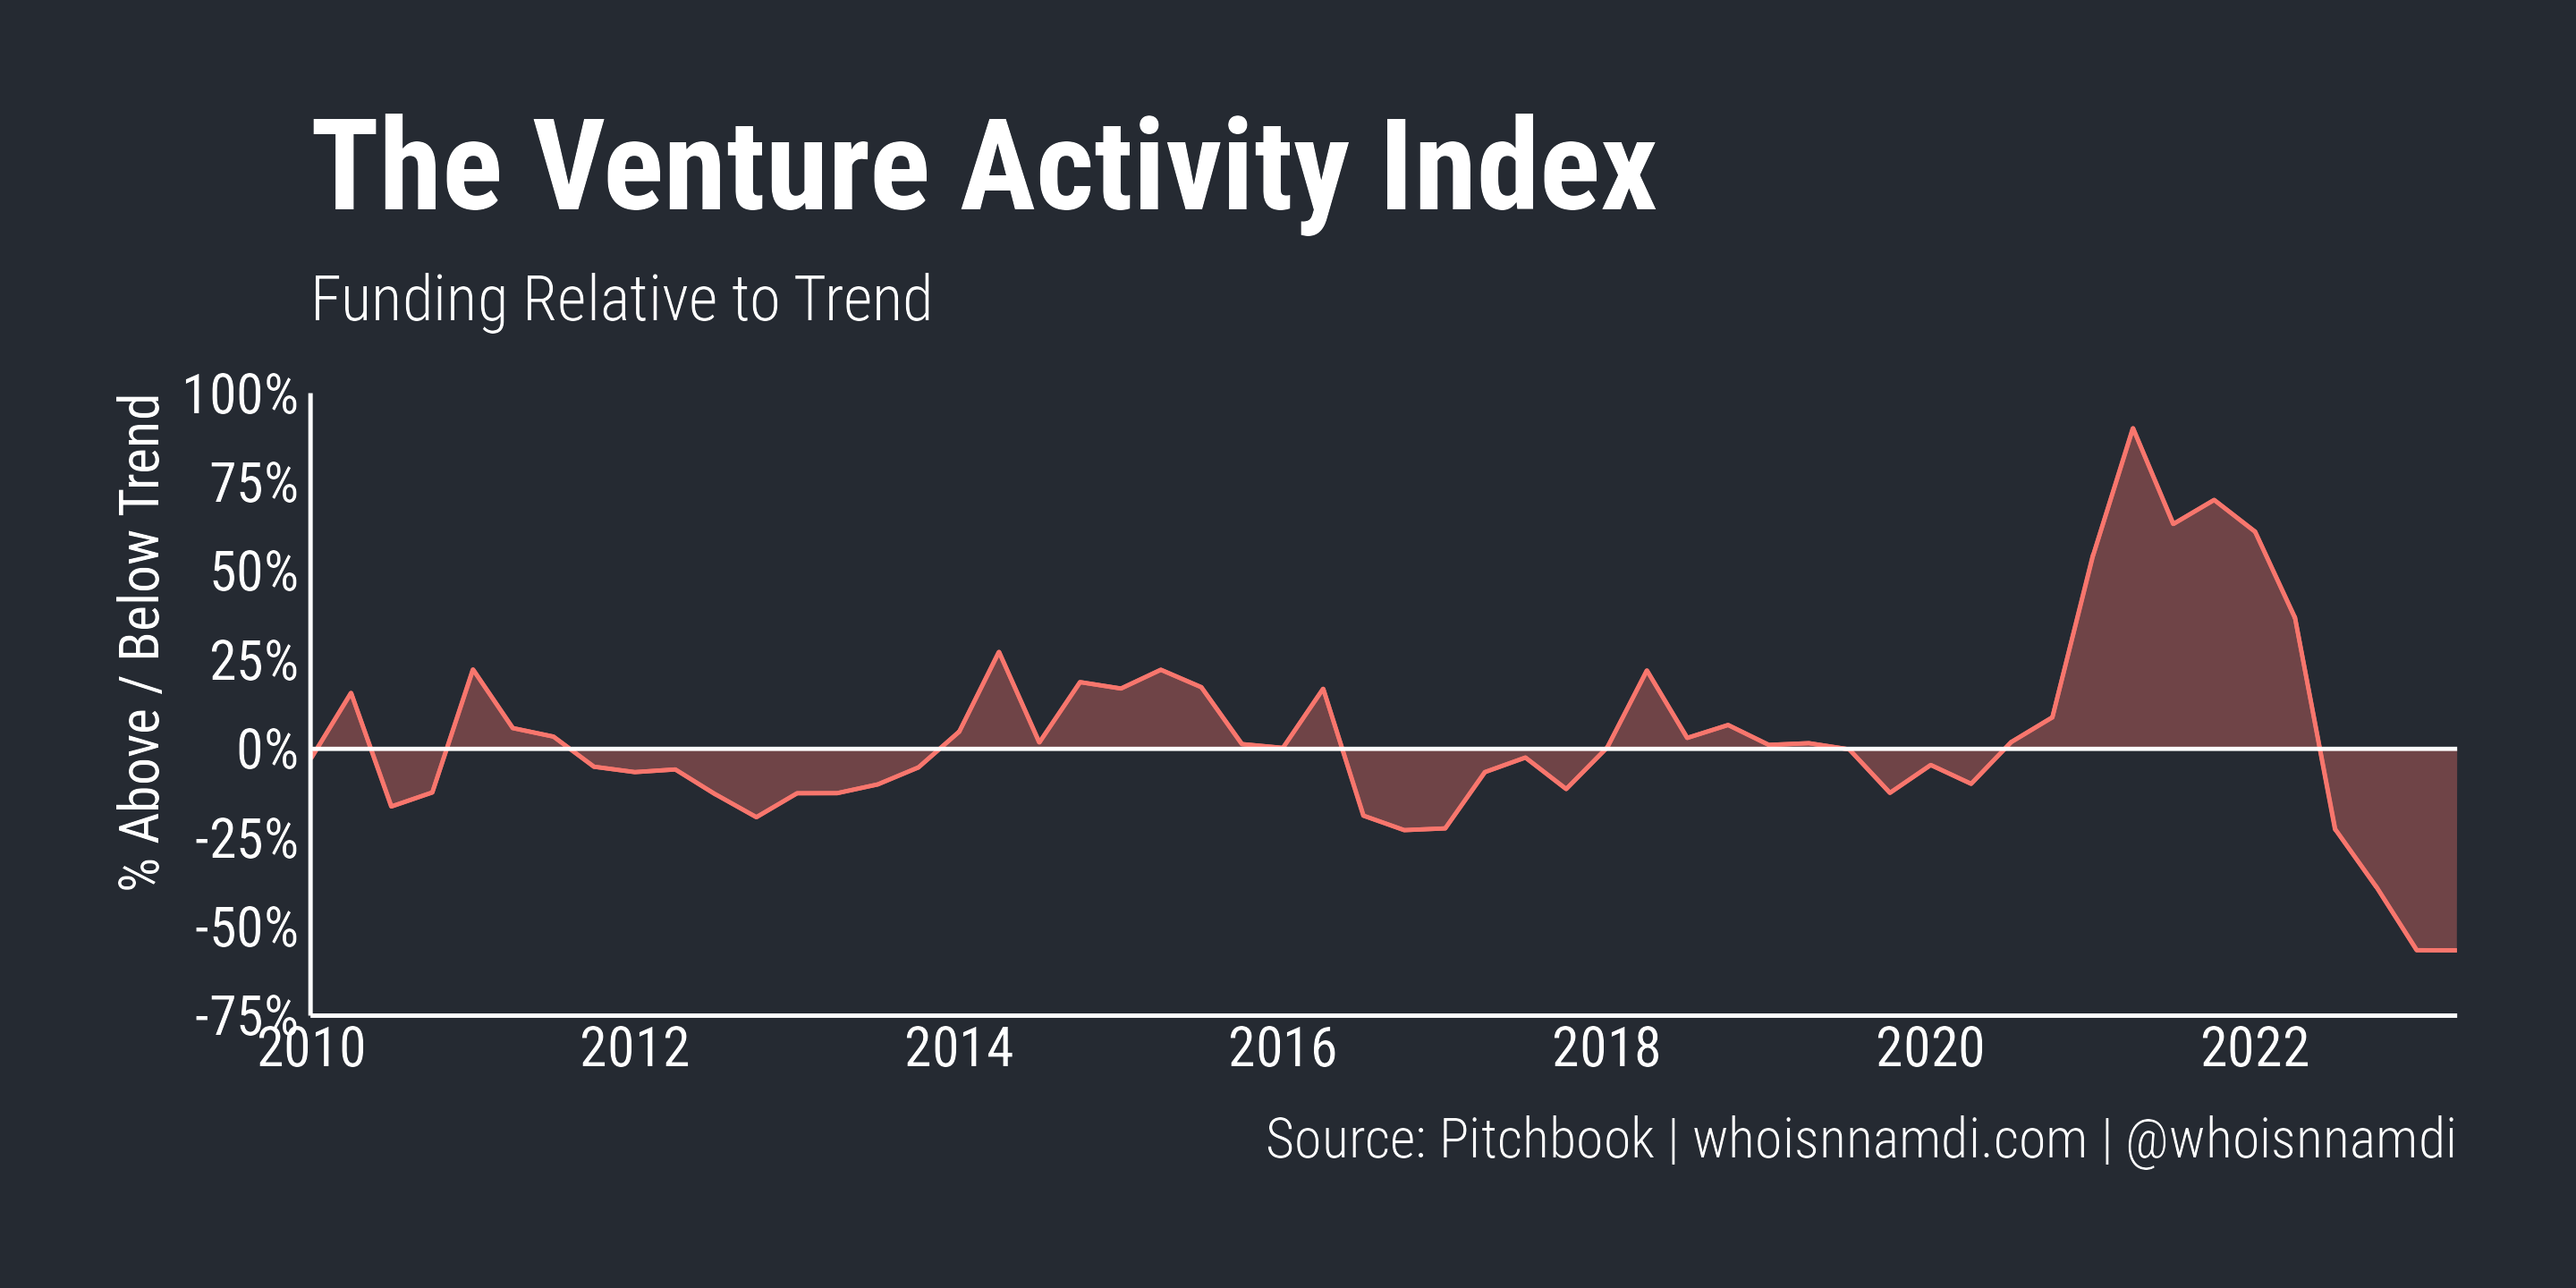 The Venture Activity Index